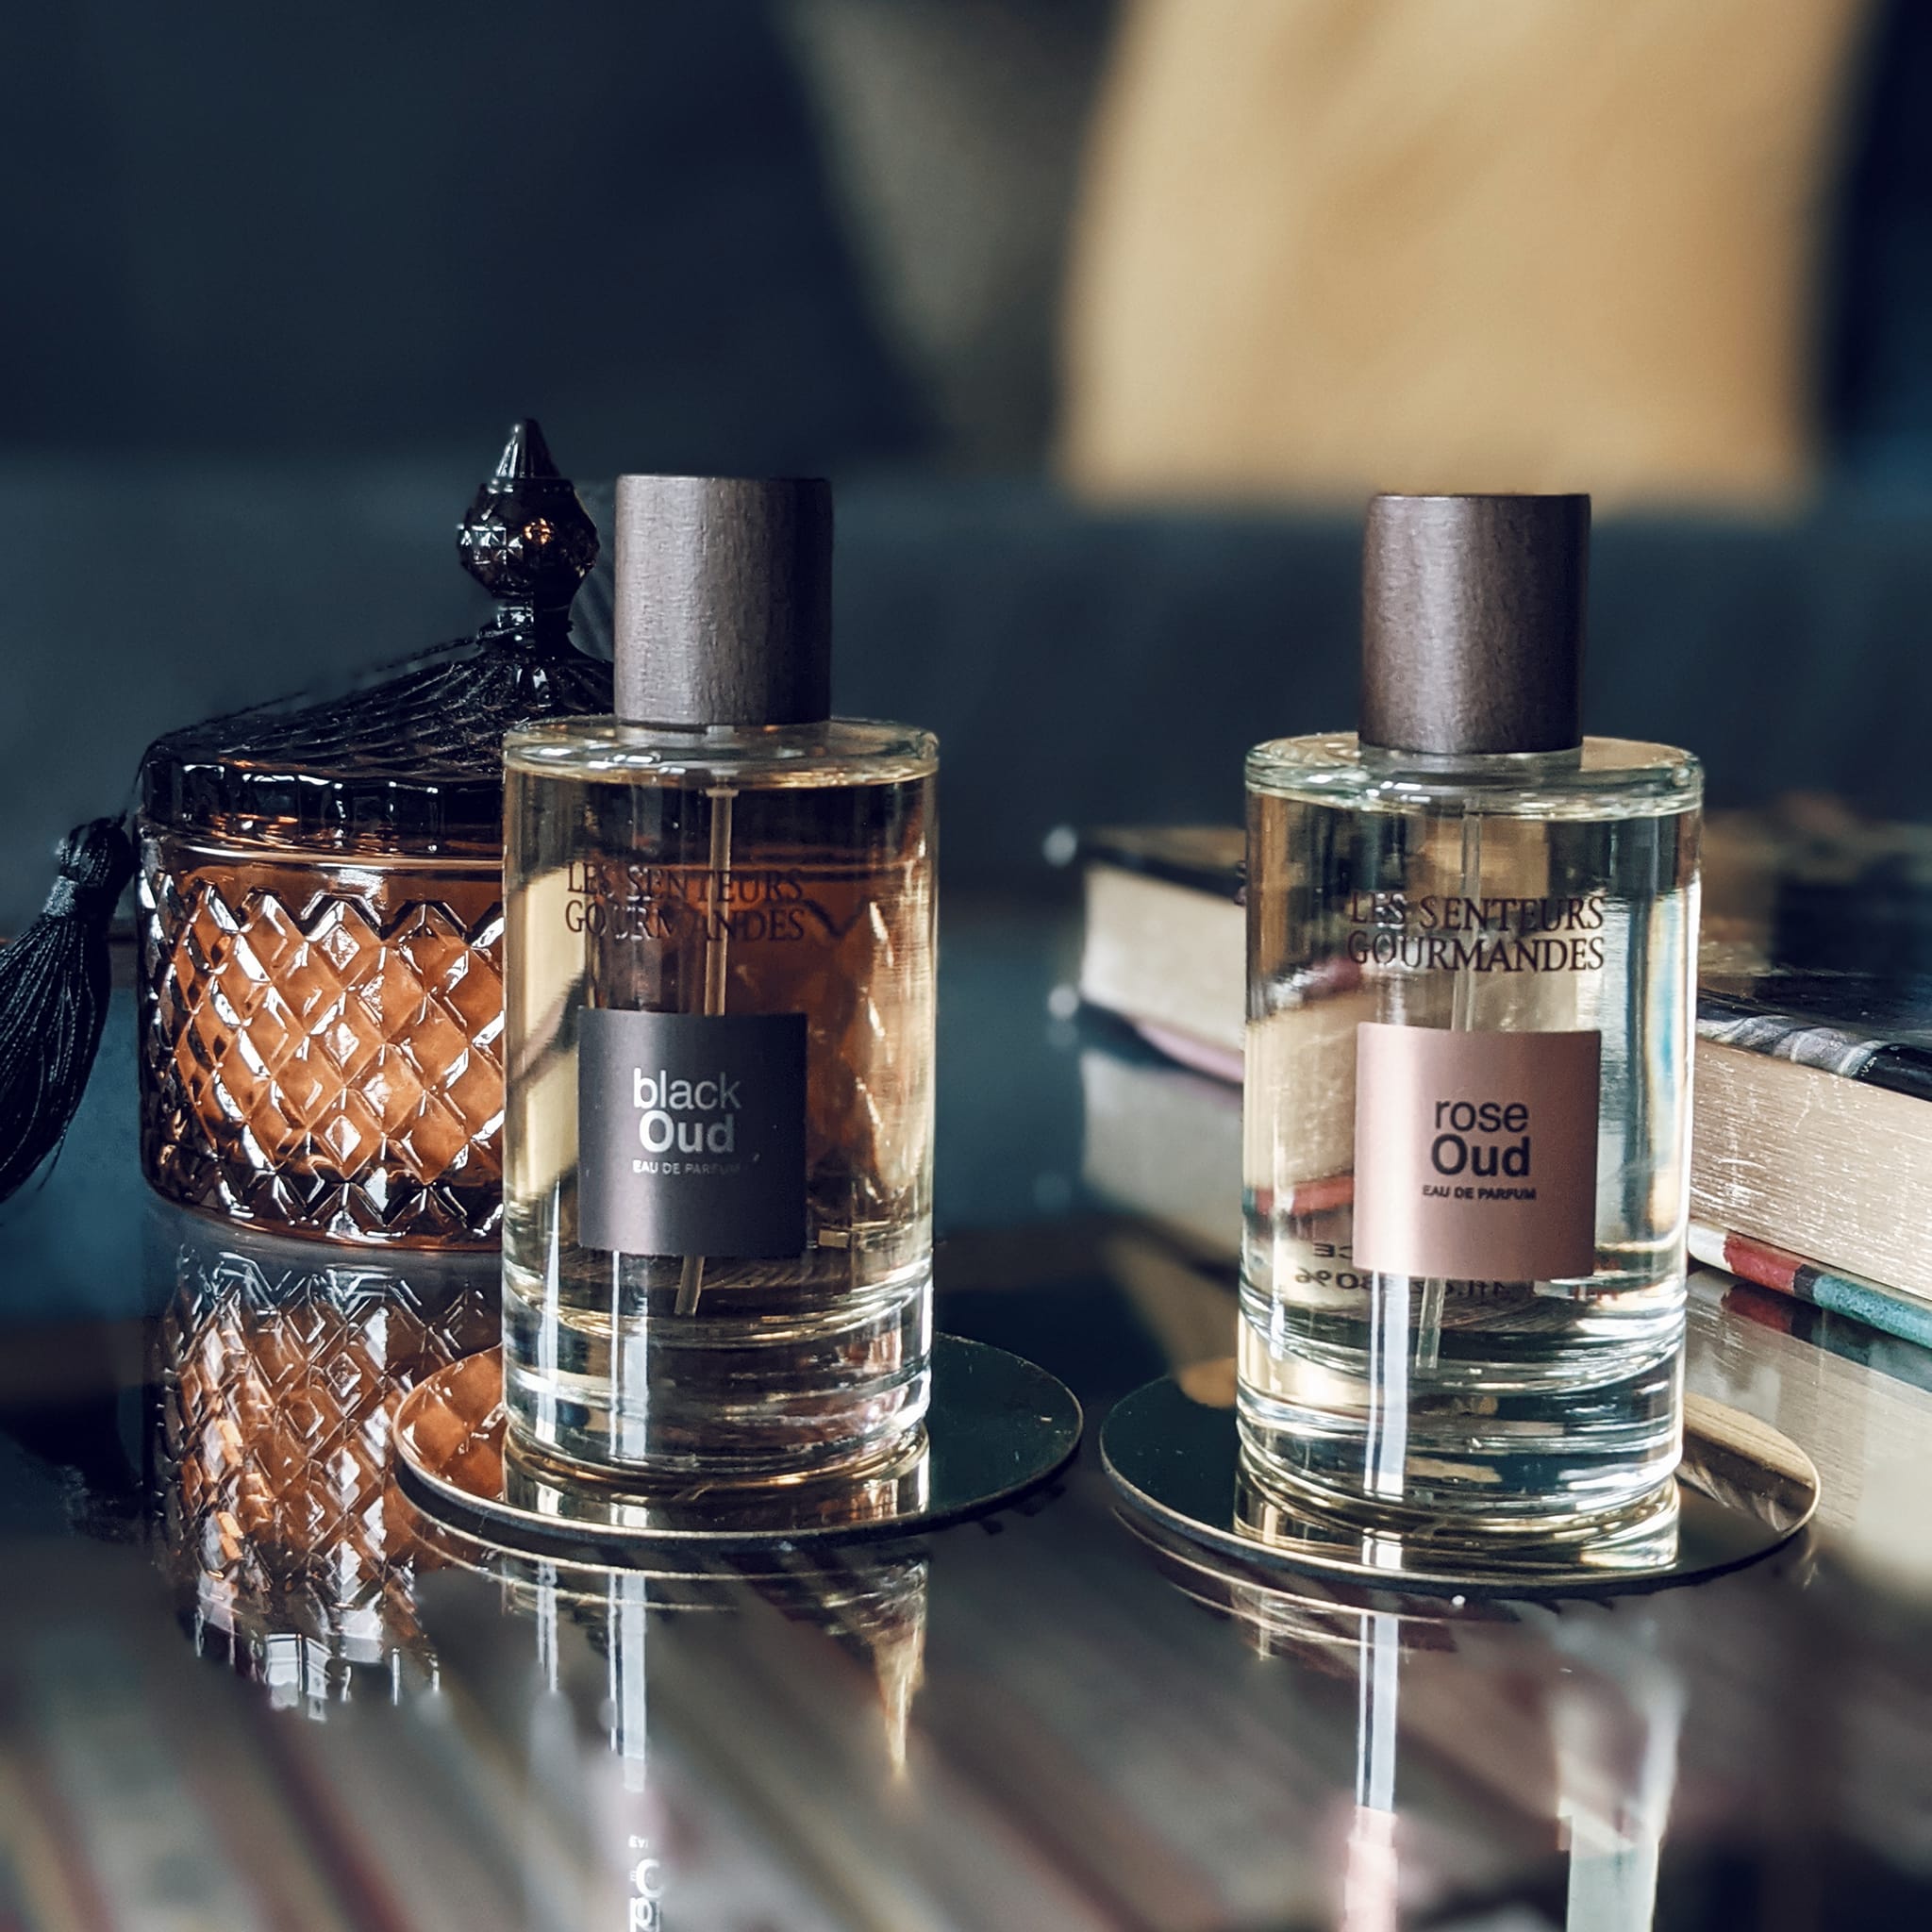 Blossom Oud by Les Senteurs Gourmandes » Reviews & Perfume Facts